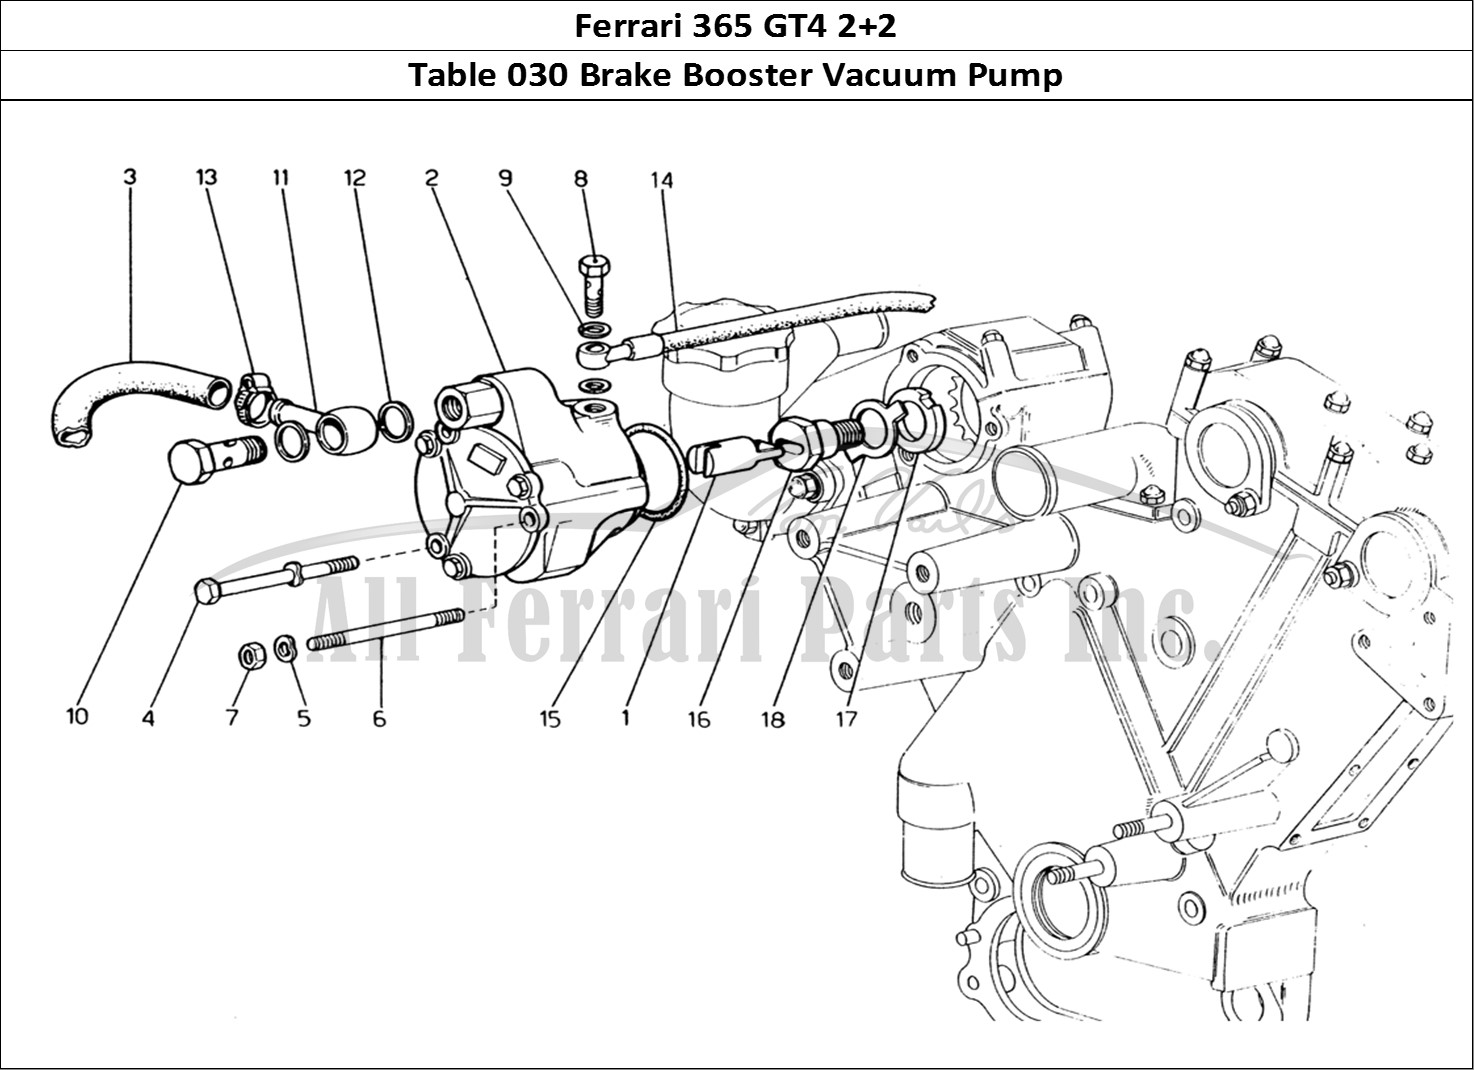 Ferrari Parts Ferrari 365 GT4 2+2 (1973) Page 030 Brake Booster Vacuum Pump